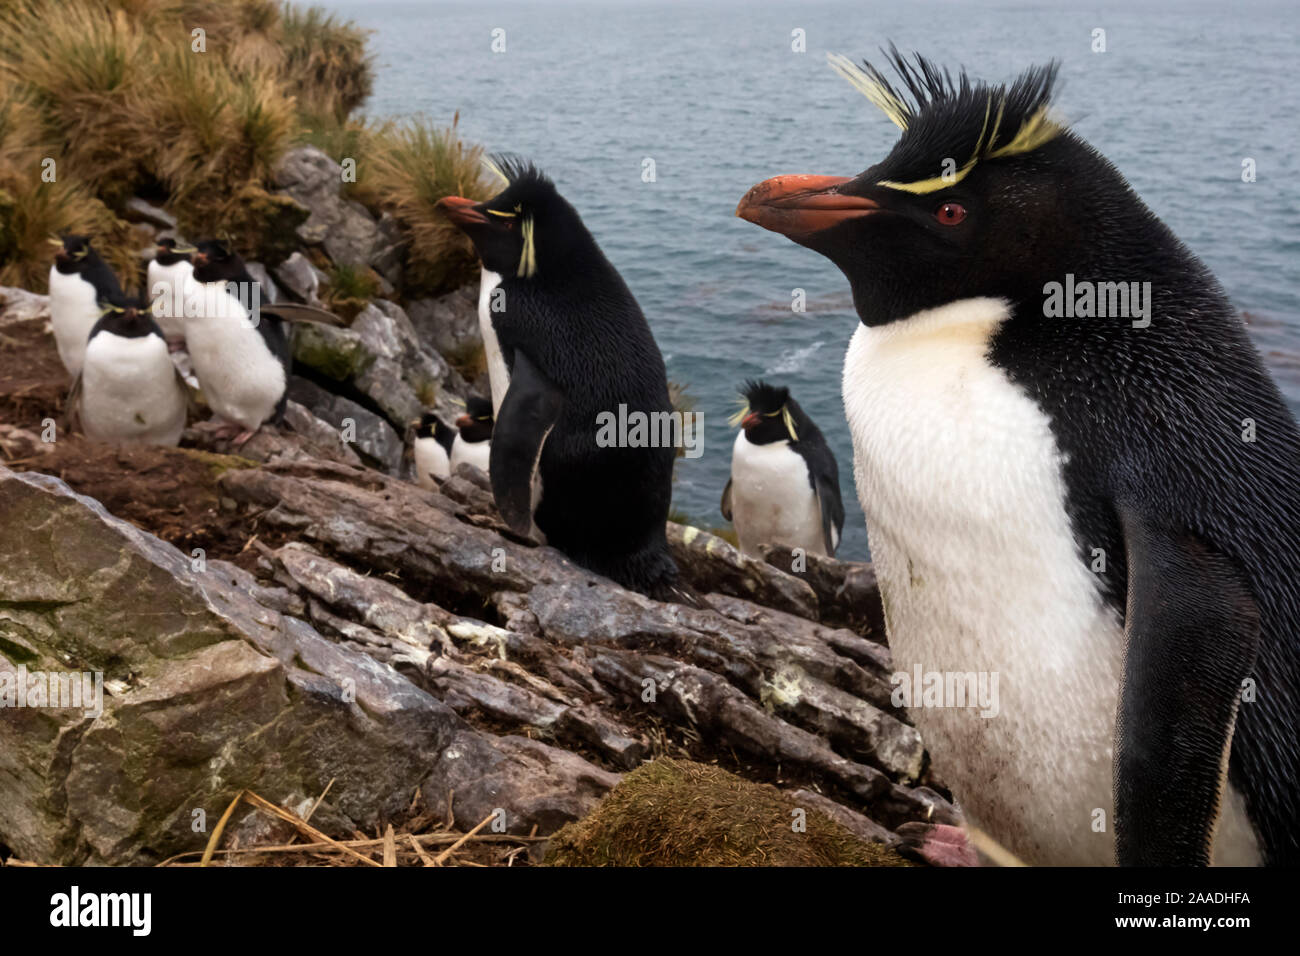 Southern Rockhopper penguin (Eudyptes chrysocome) colony, Kidney Island, Falkland Islands, October. Vulnerable species. Stock Photo